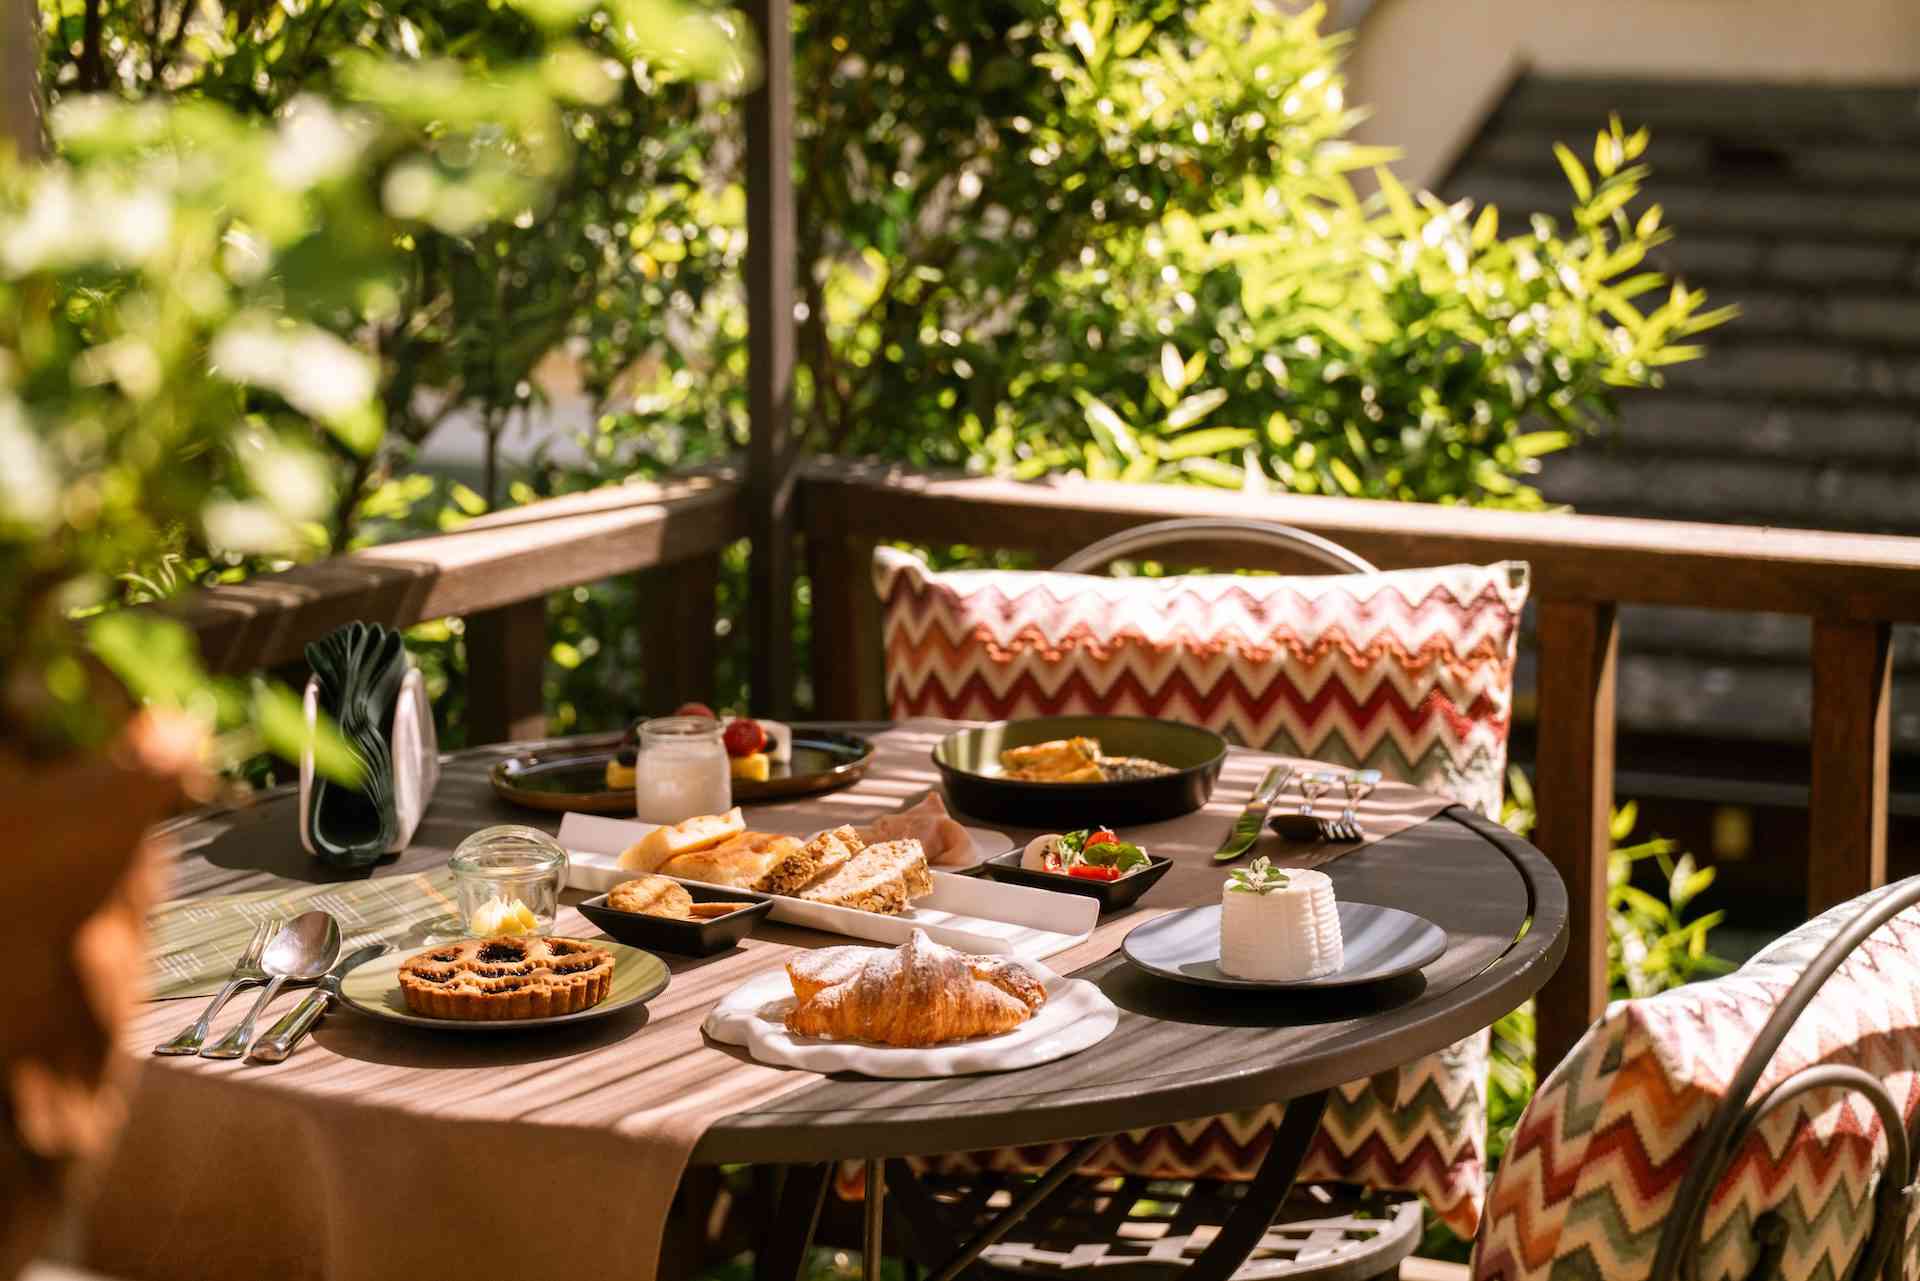 Garden to plate Breakfast at our Adults-Only Hotel Villa Edera & La Torretta on the Italian Riviera between Portofino and Cinque Terre